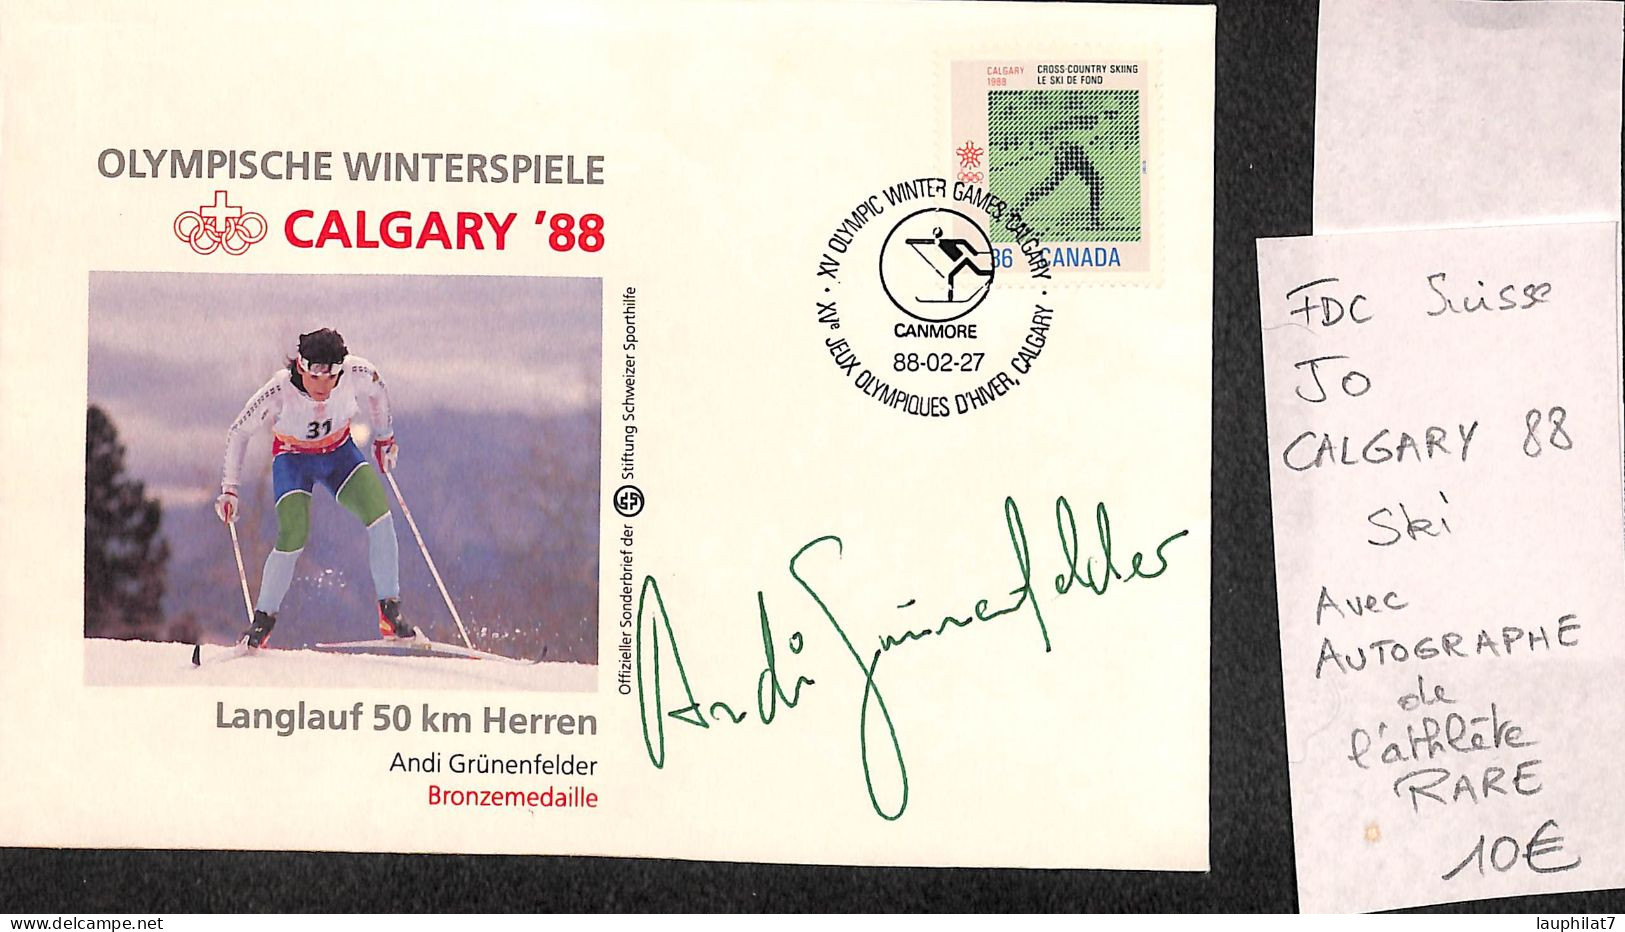 [900094]TB//-Suisse 1988 - FDC, Documents, Andi Grünenfelder, Calgary, Avec Autographe De L'athlète, RARE, Jeux Olympiq - Inverno1988: Calgary